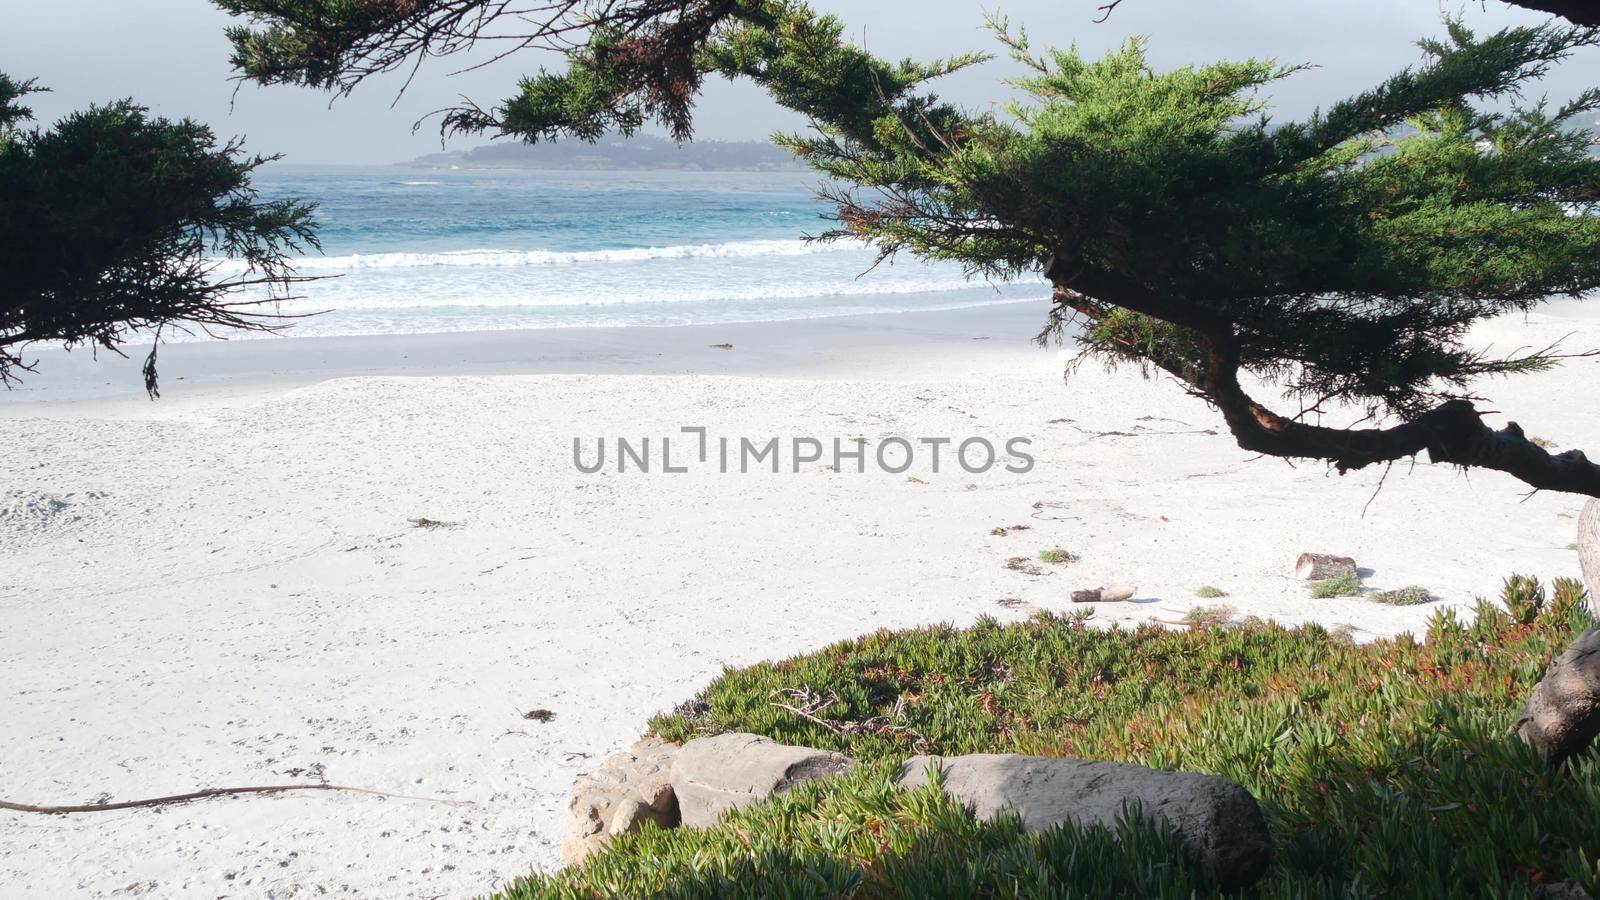 Empty ocean sandy beach in Carmel, Monterey nature, California coast, USA. Big foamy sea water waves crashing on shore. Vacations waterfront beachfront resort. Sunny foggy weather, pine cypress tree.